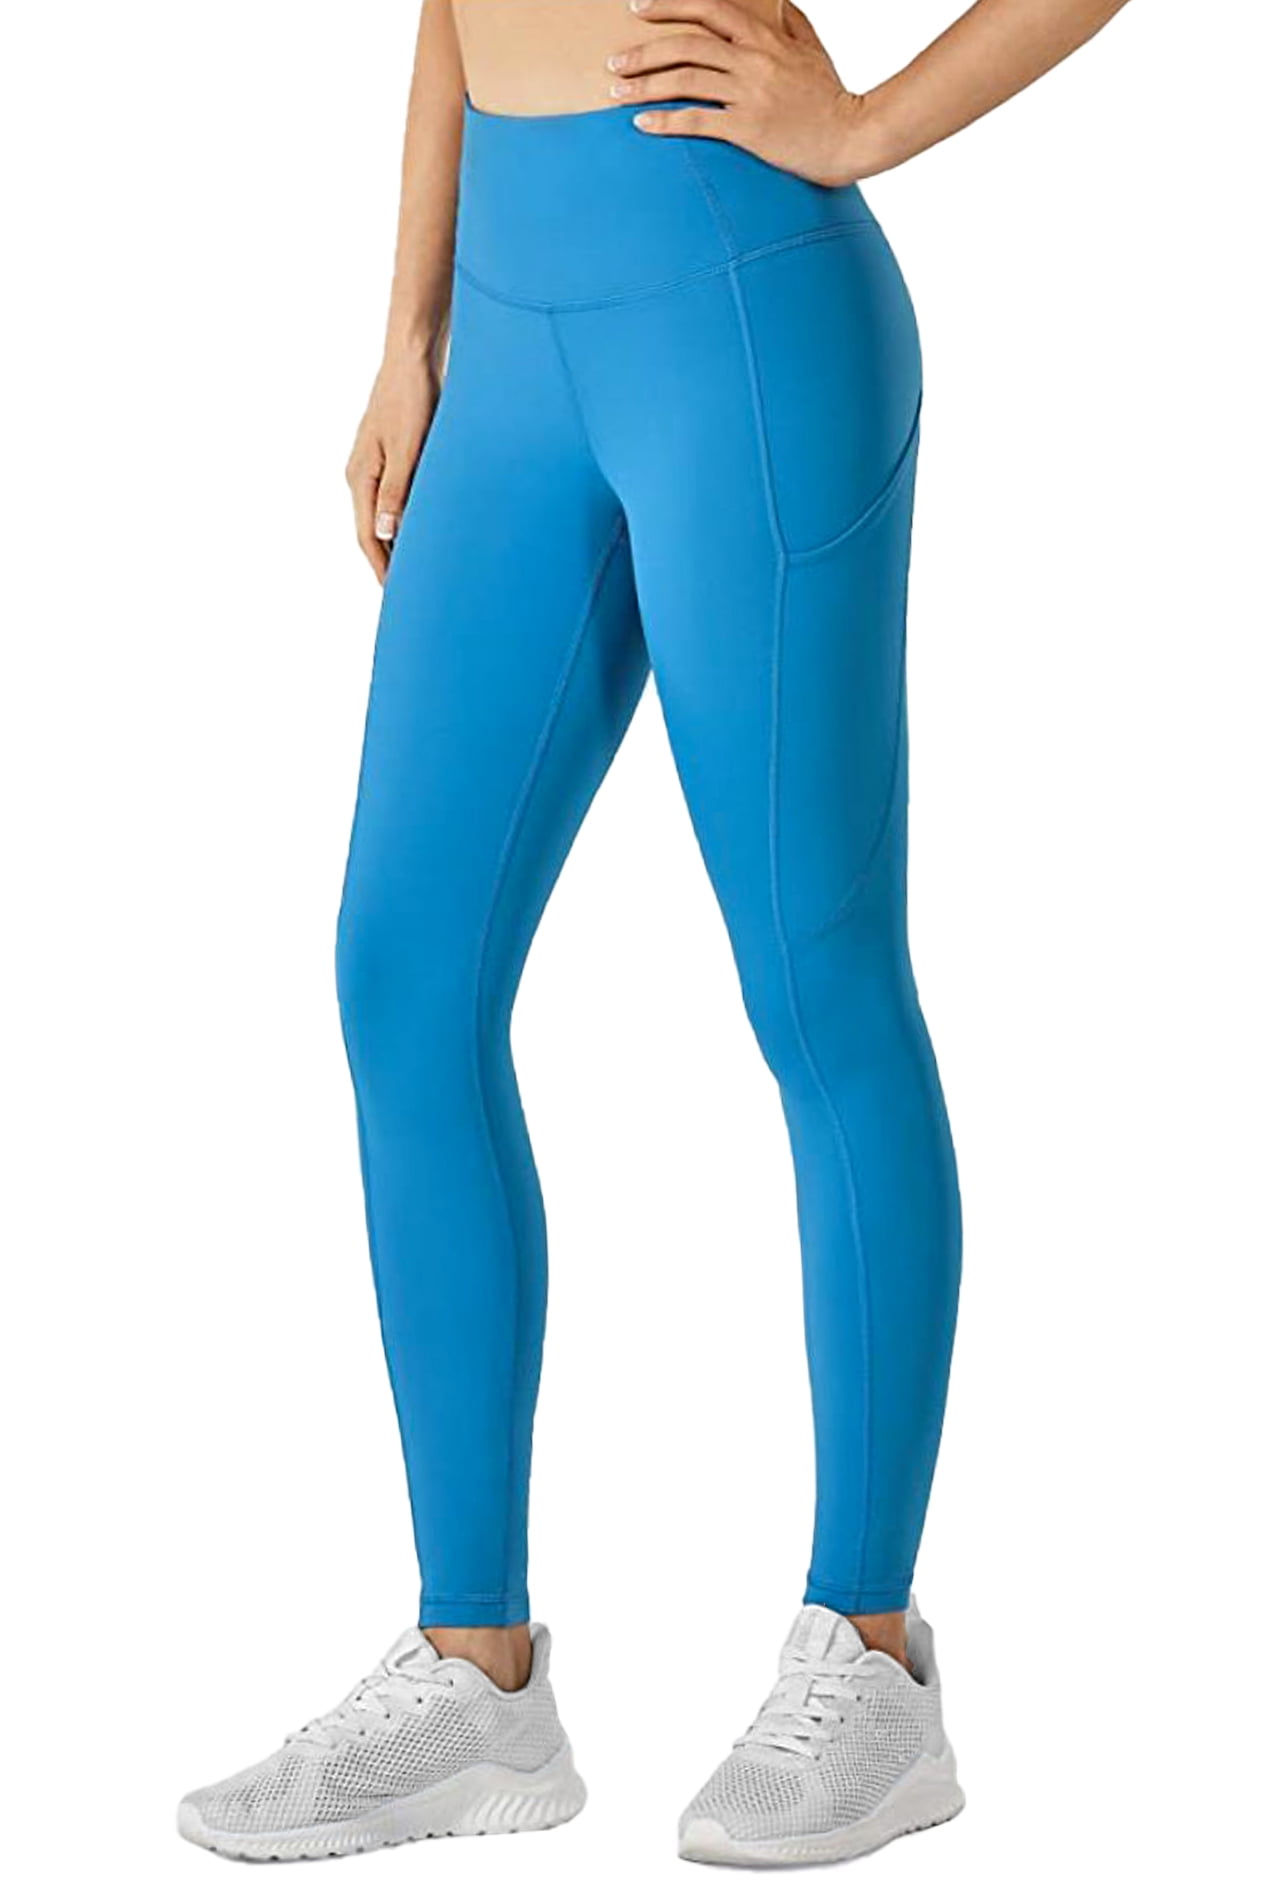 Kopykat Lycra Spandex Highwaist Sports Gym Tights Yoga Pants with Pocket  for Women KOP-54